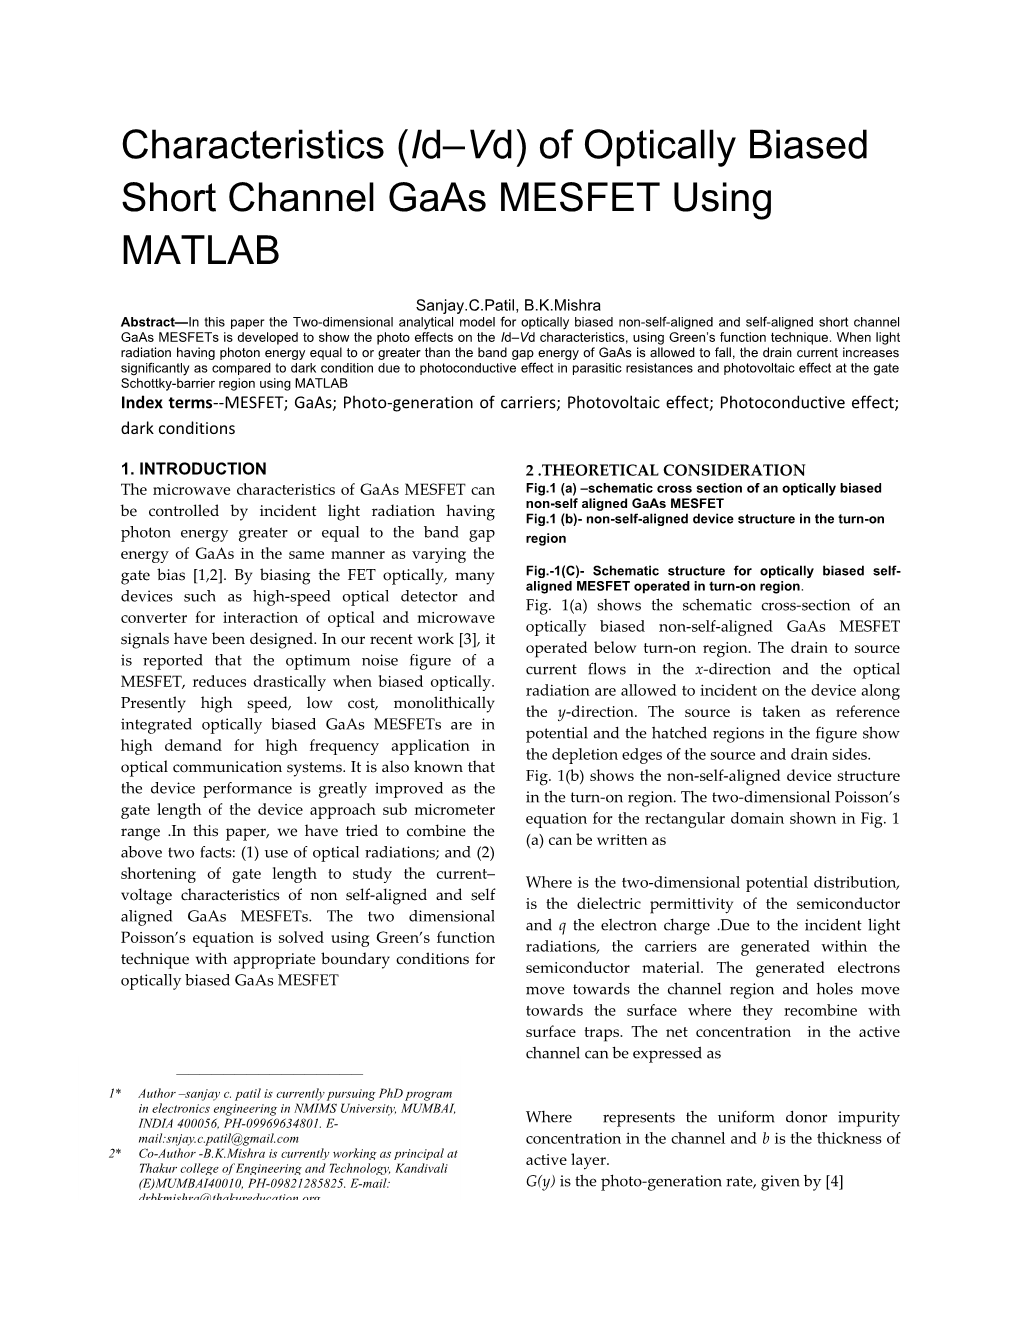 Characteristics (Id Vd) of Optically Biased Short Channel Gaas MESFET Using MATLAB